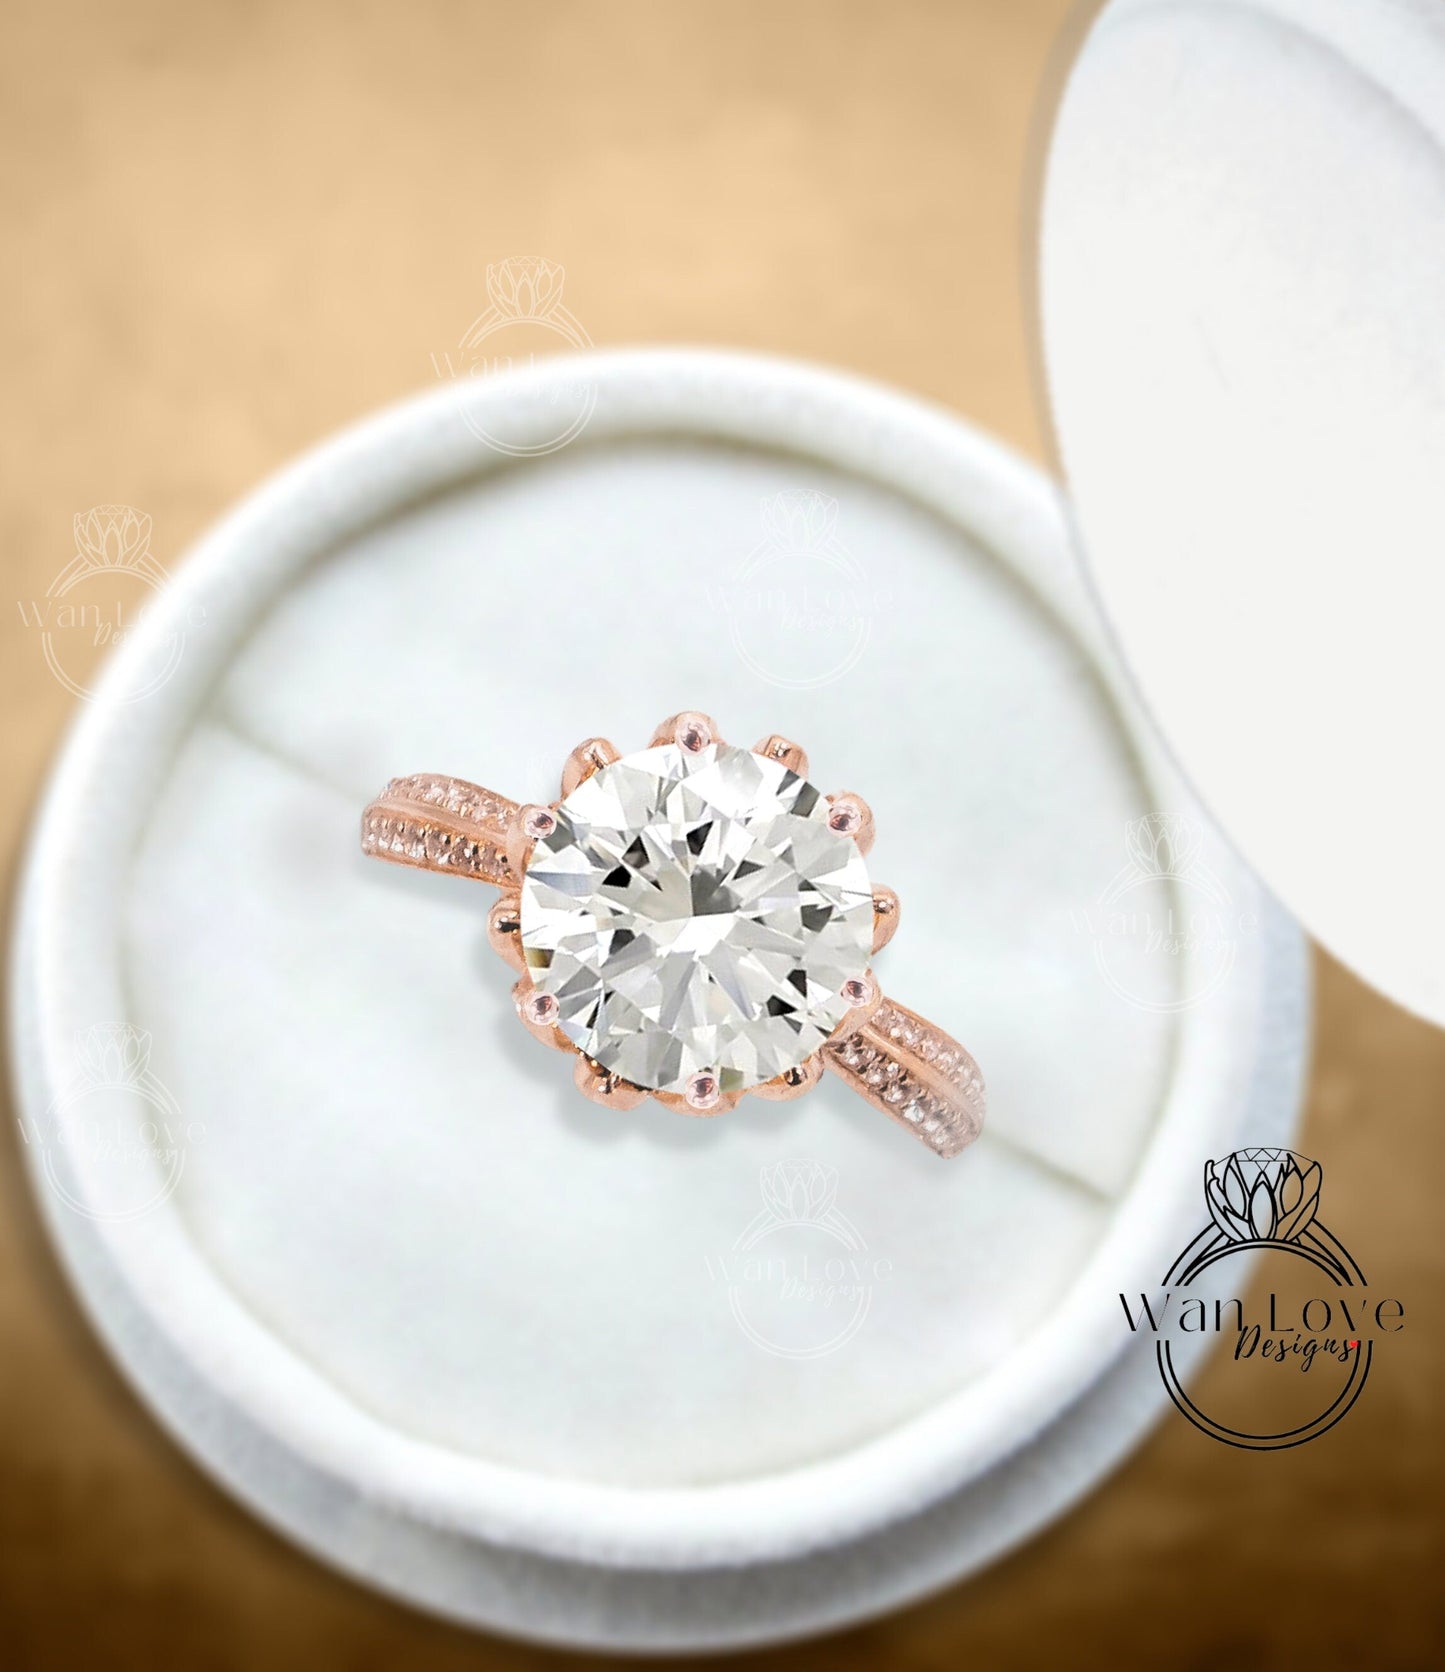 Diamond Lotus Flower Ring, Round Diamond Ring White Gold, Certified Lab Diamond Ring Band,Unique Diamond Ring 14k White Gold Engagement Ring Wan Love Designs